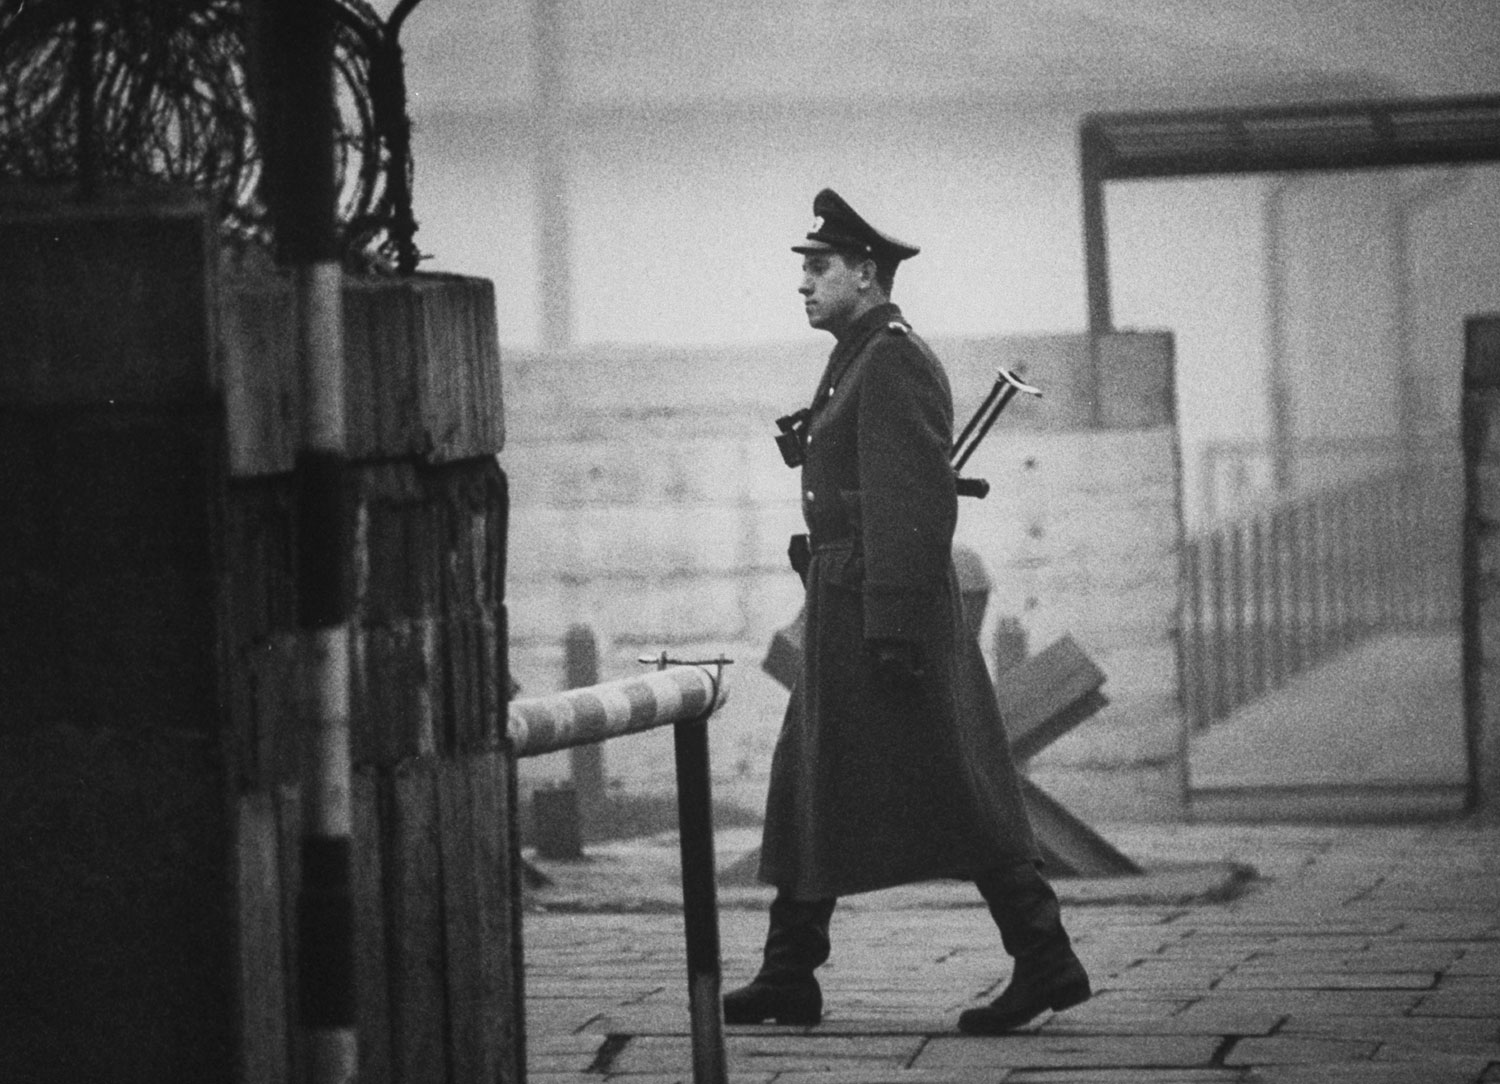 An East German policeman walks near Checkpoint Charlie in Berlin